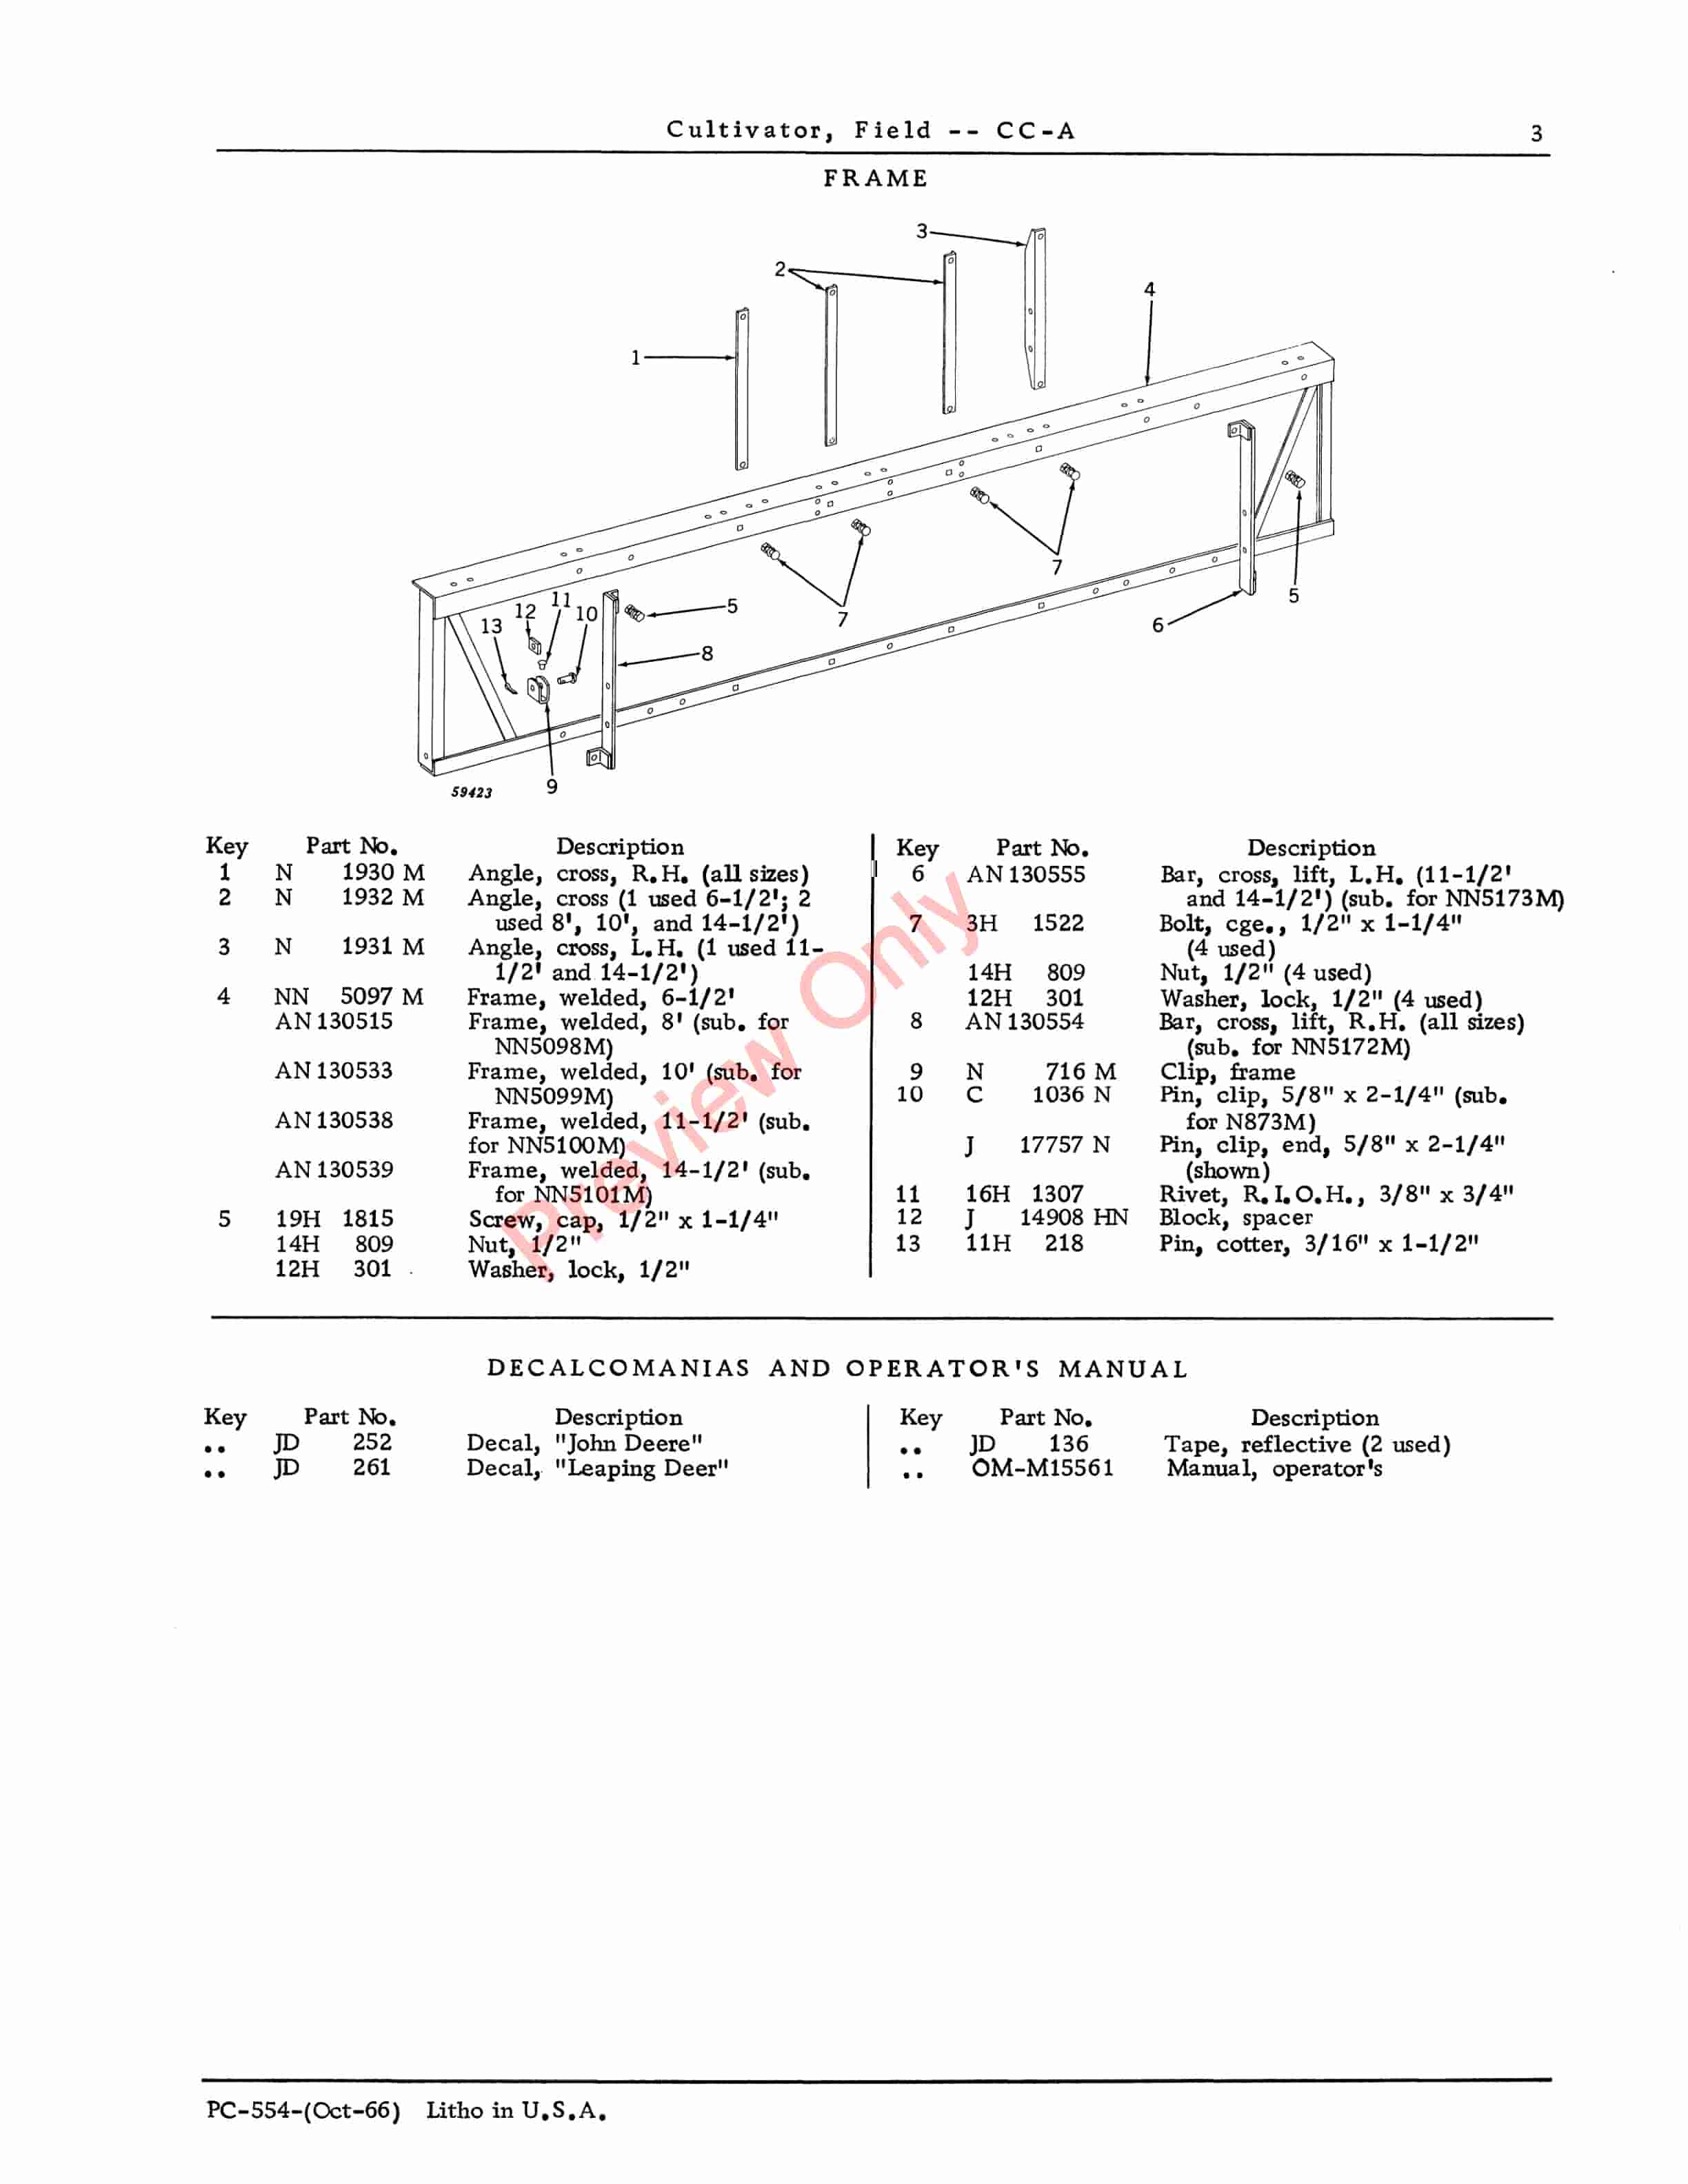 John Deere Field Cultivator – Model CC-A Parts Catalog PC554 01OCT65-5